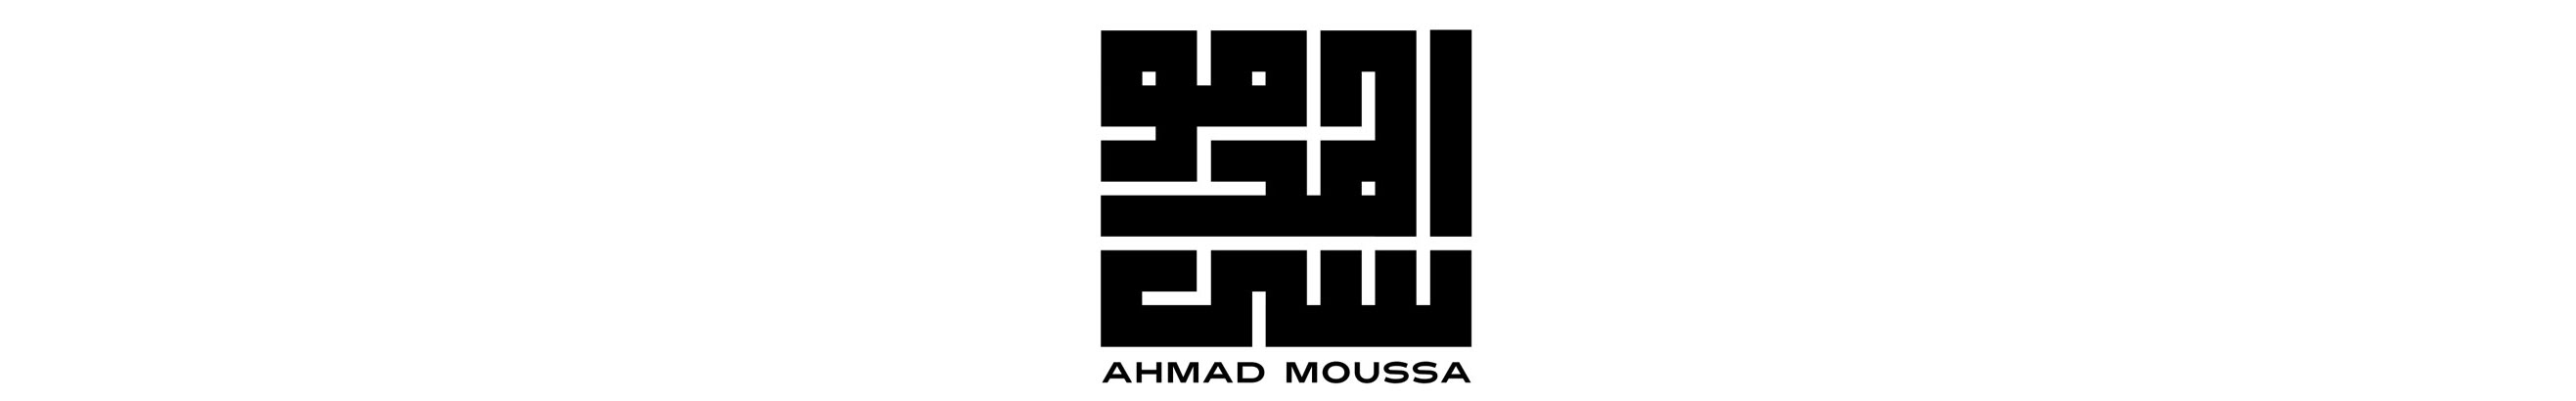 Ahmad Moussa のプロファイルバナー